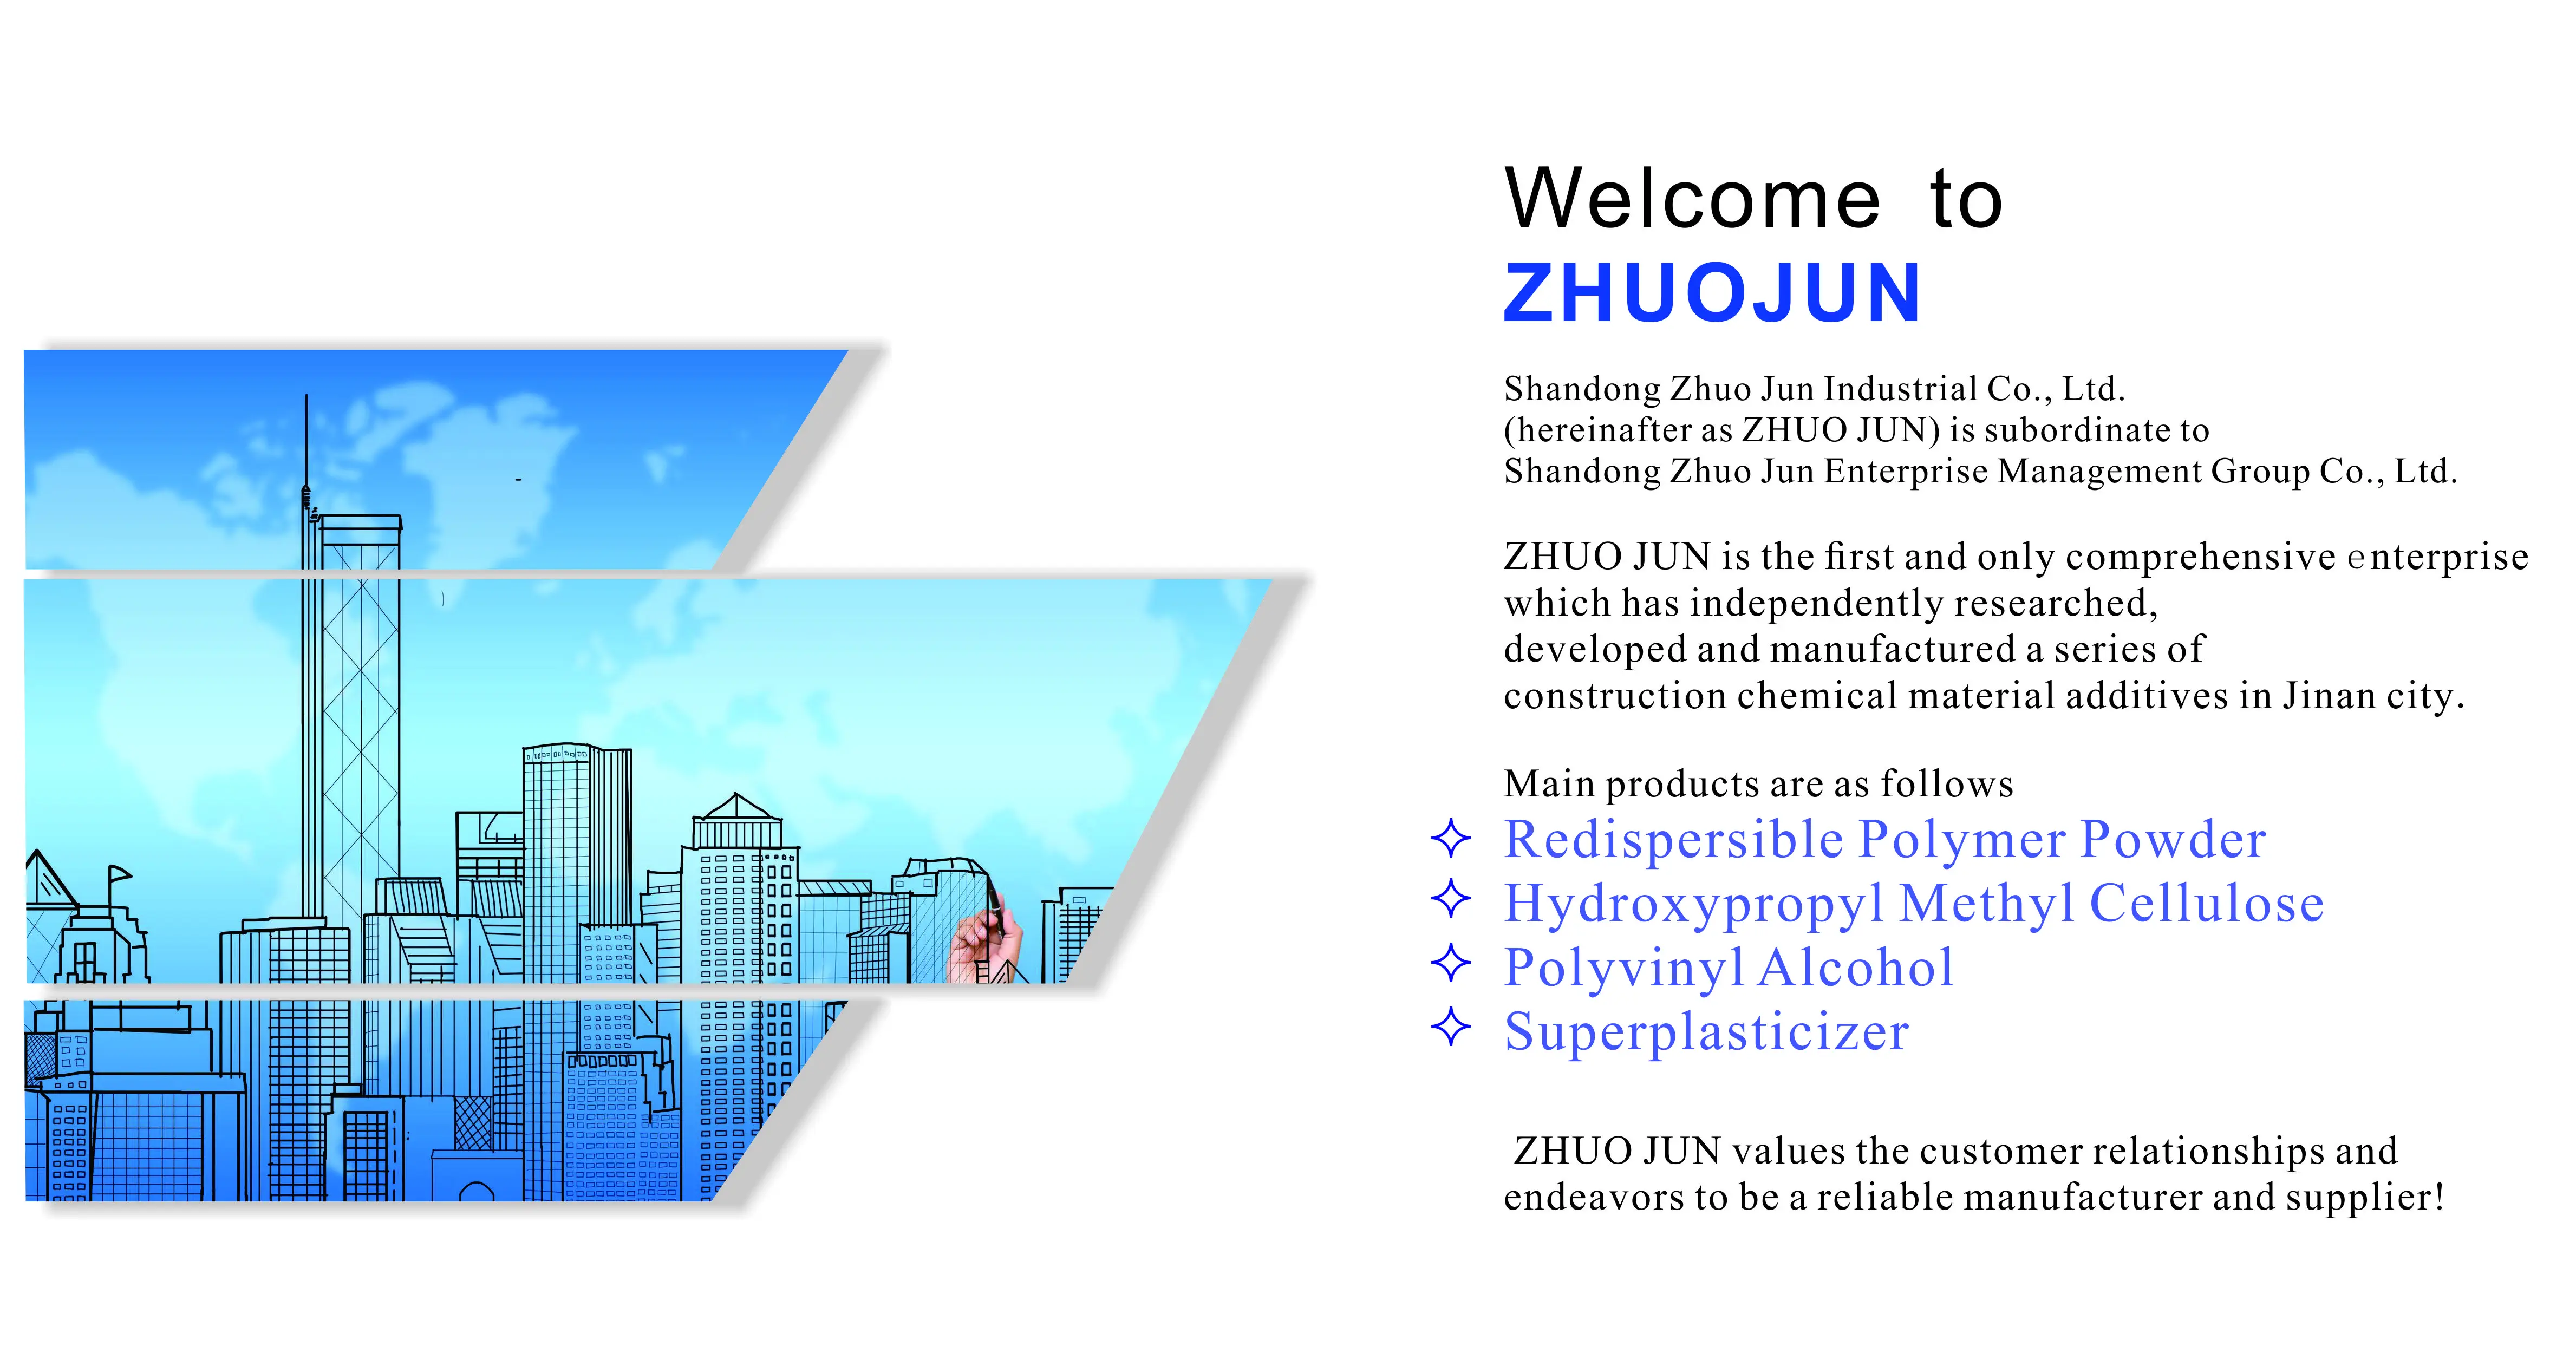 Welcome to ZHUOJUN